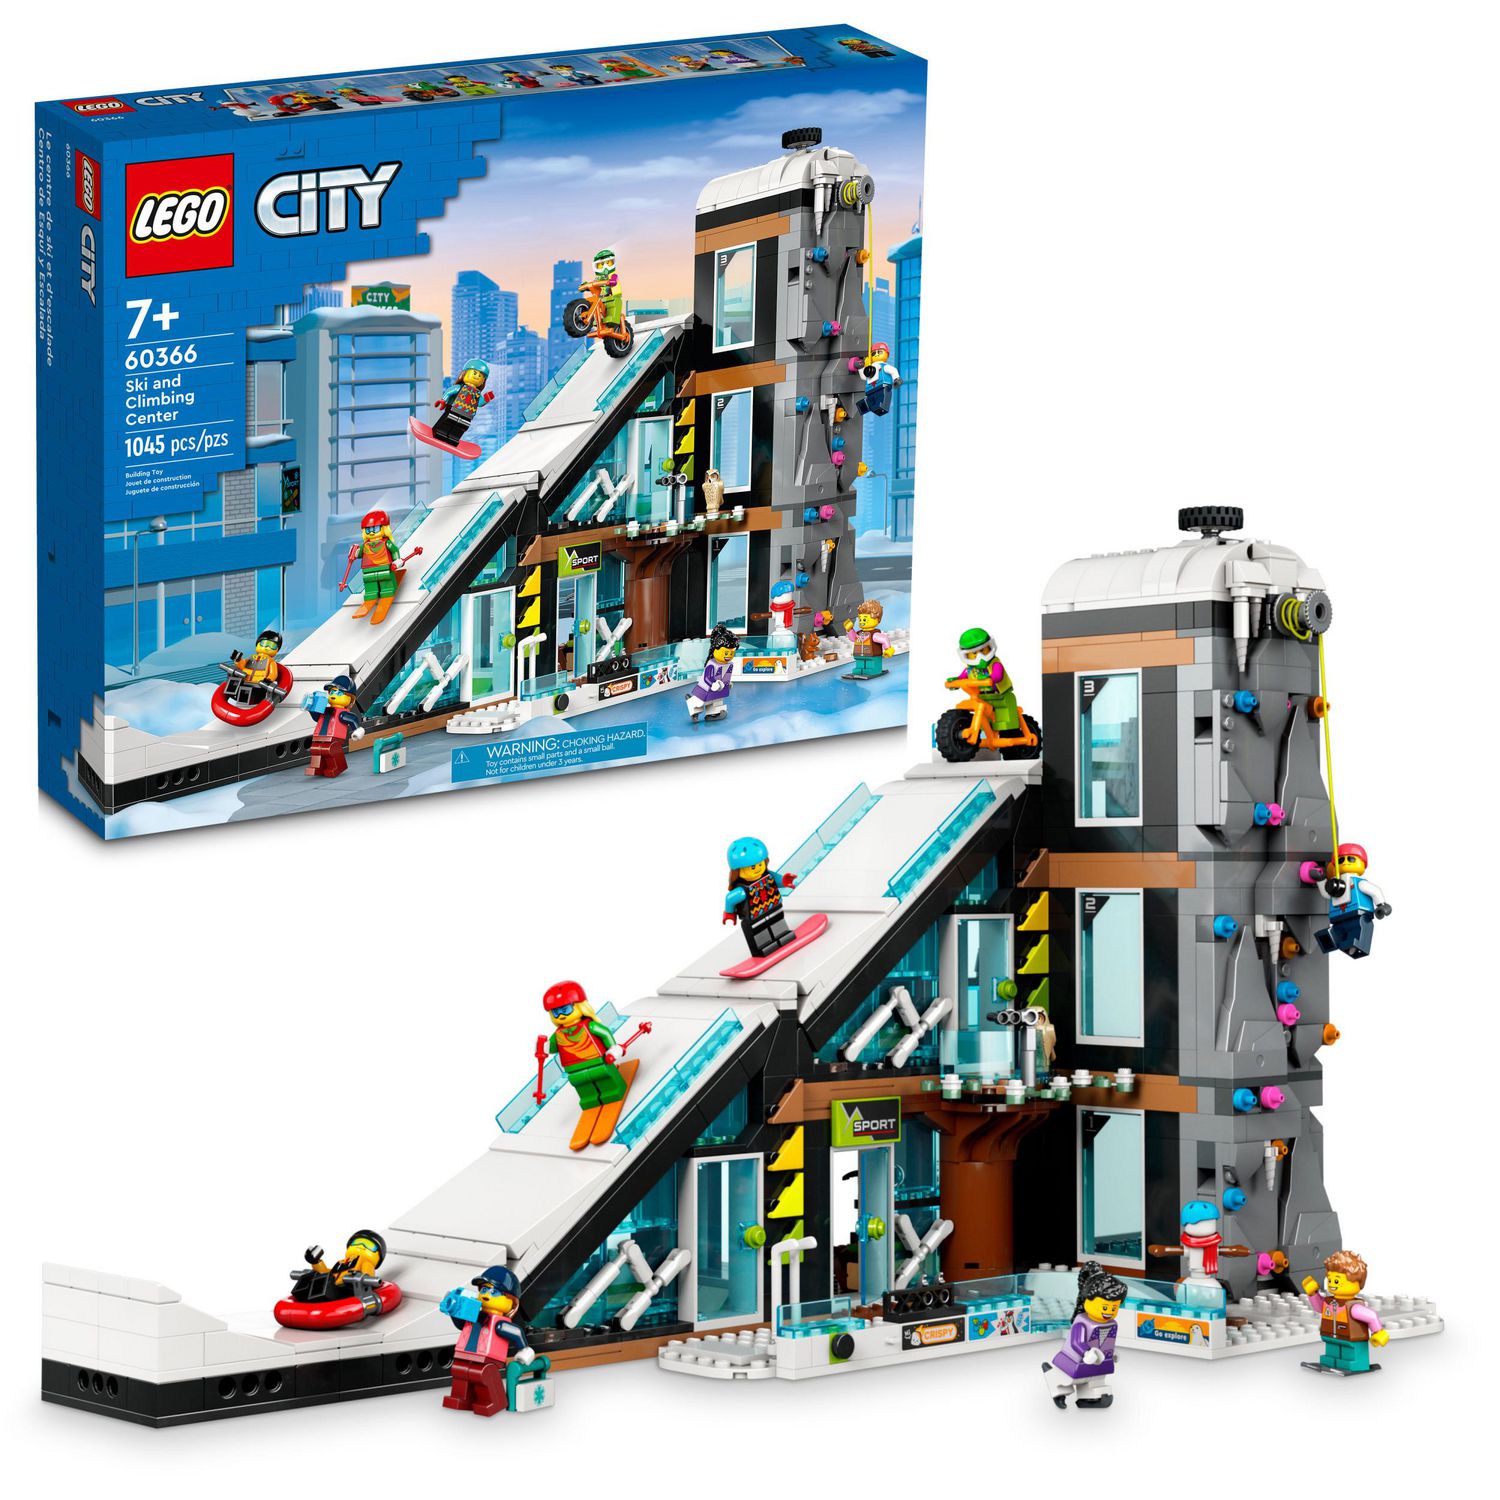 LEGO City Ski and Climbing Center 60366 Building Toy Set, 3-Level